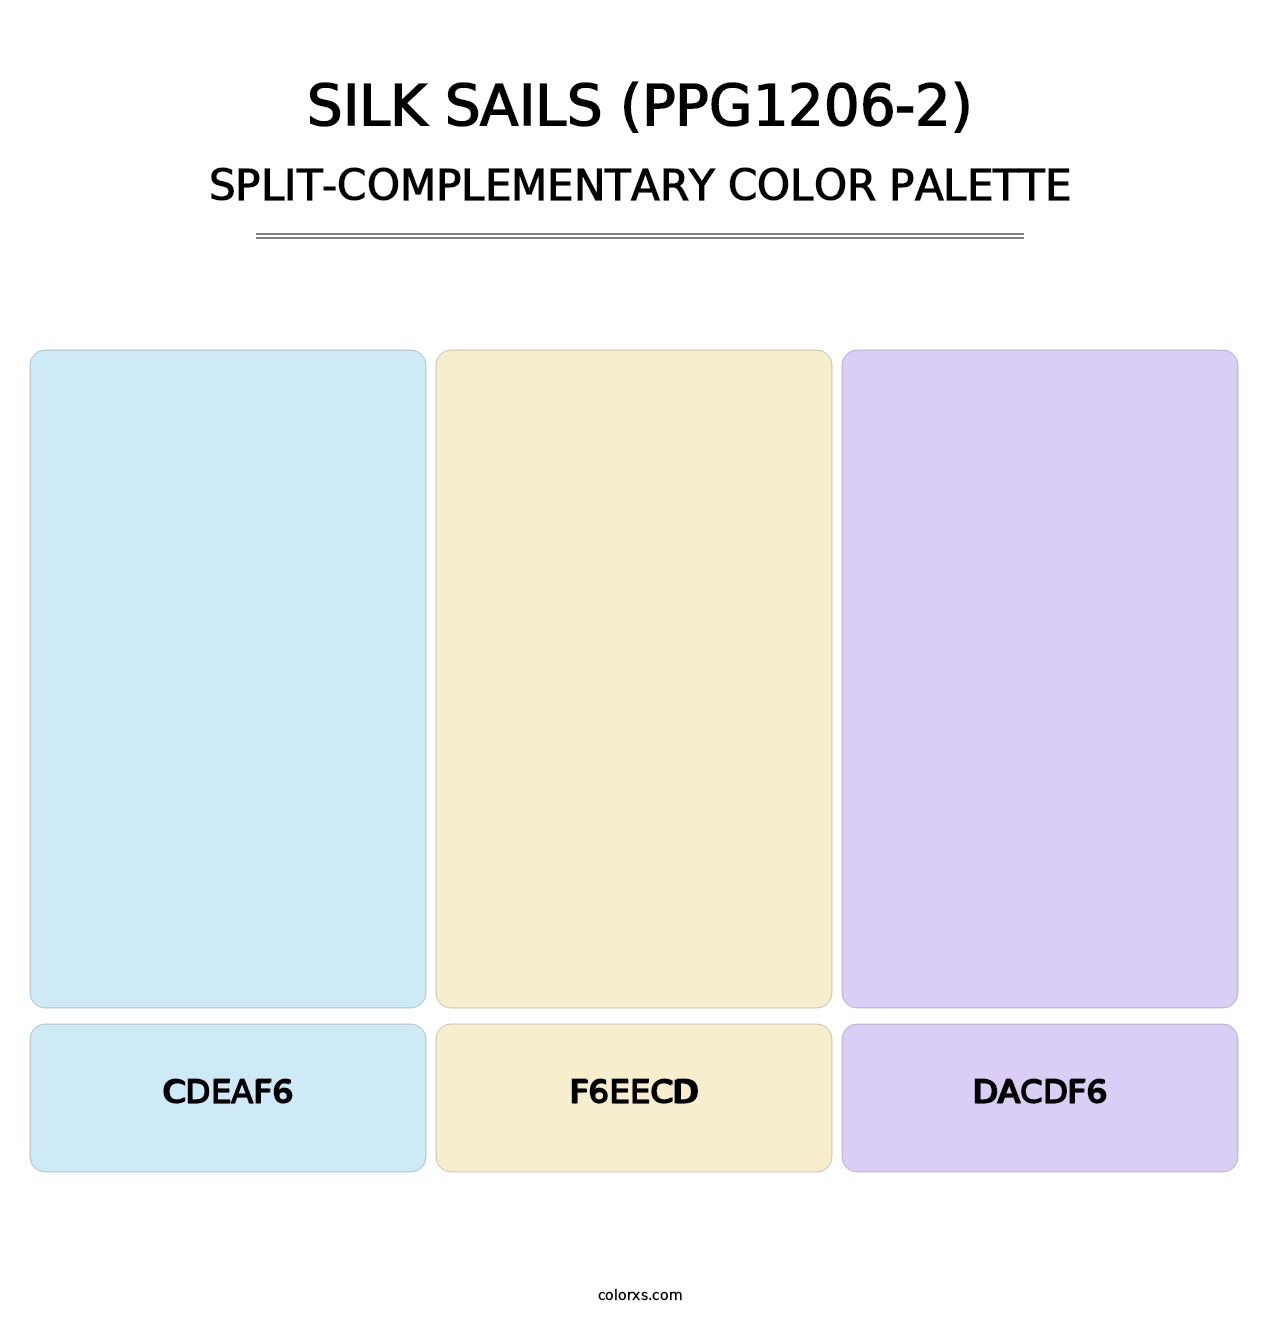 Silk Sails (PPG1206-2) - Split-Complementary Color Palette